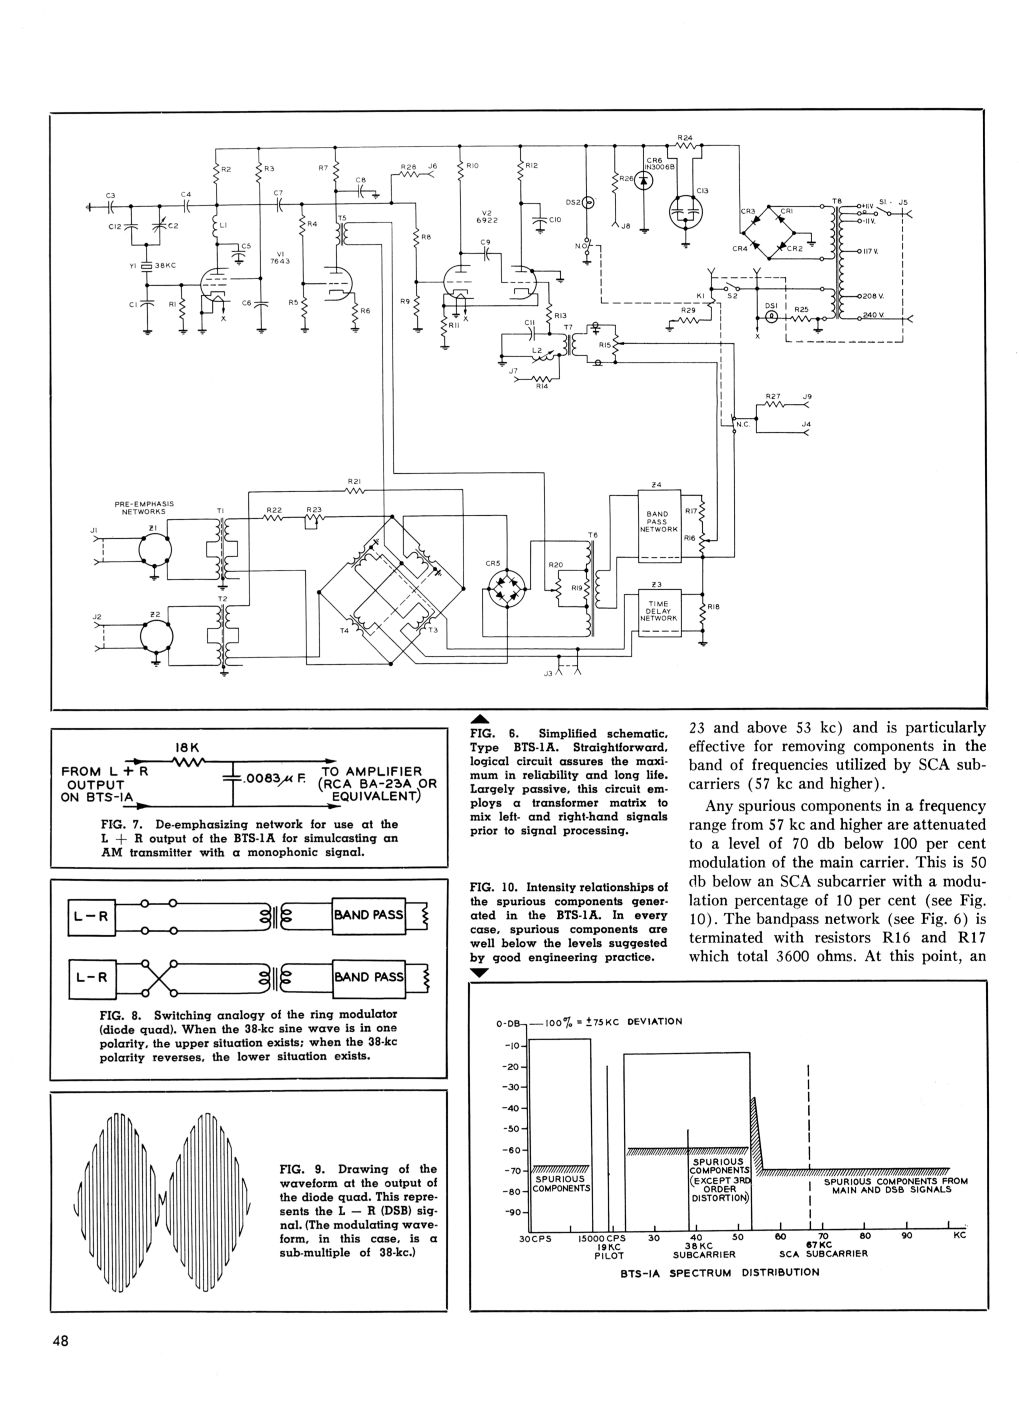 RCA TT-25AL Television Amplifier, page 4